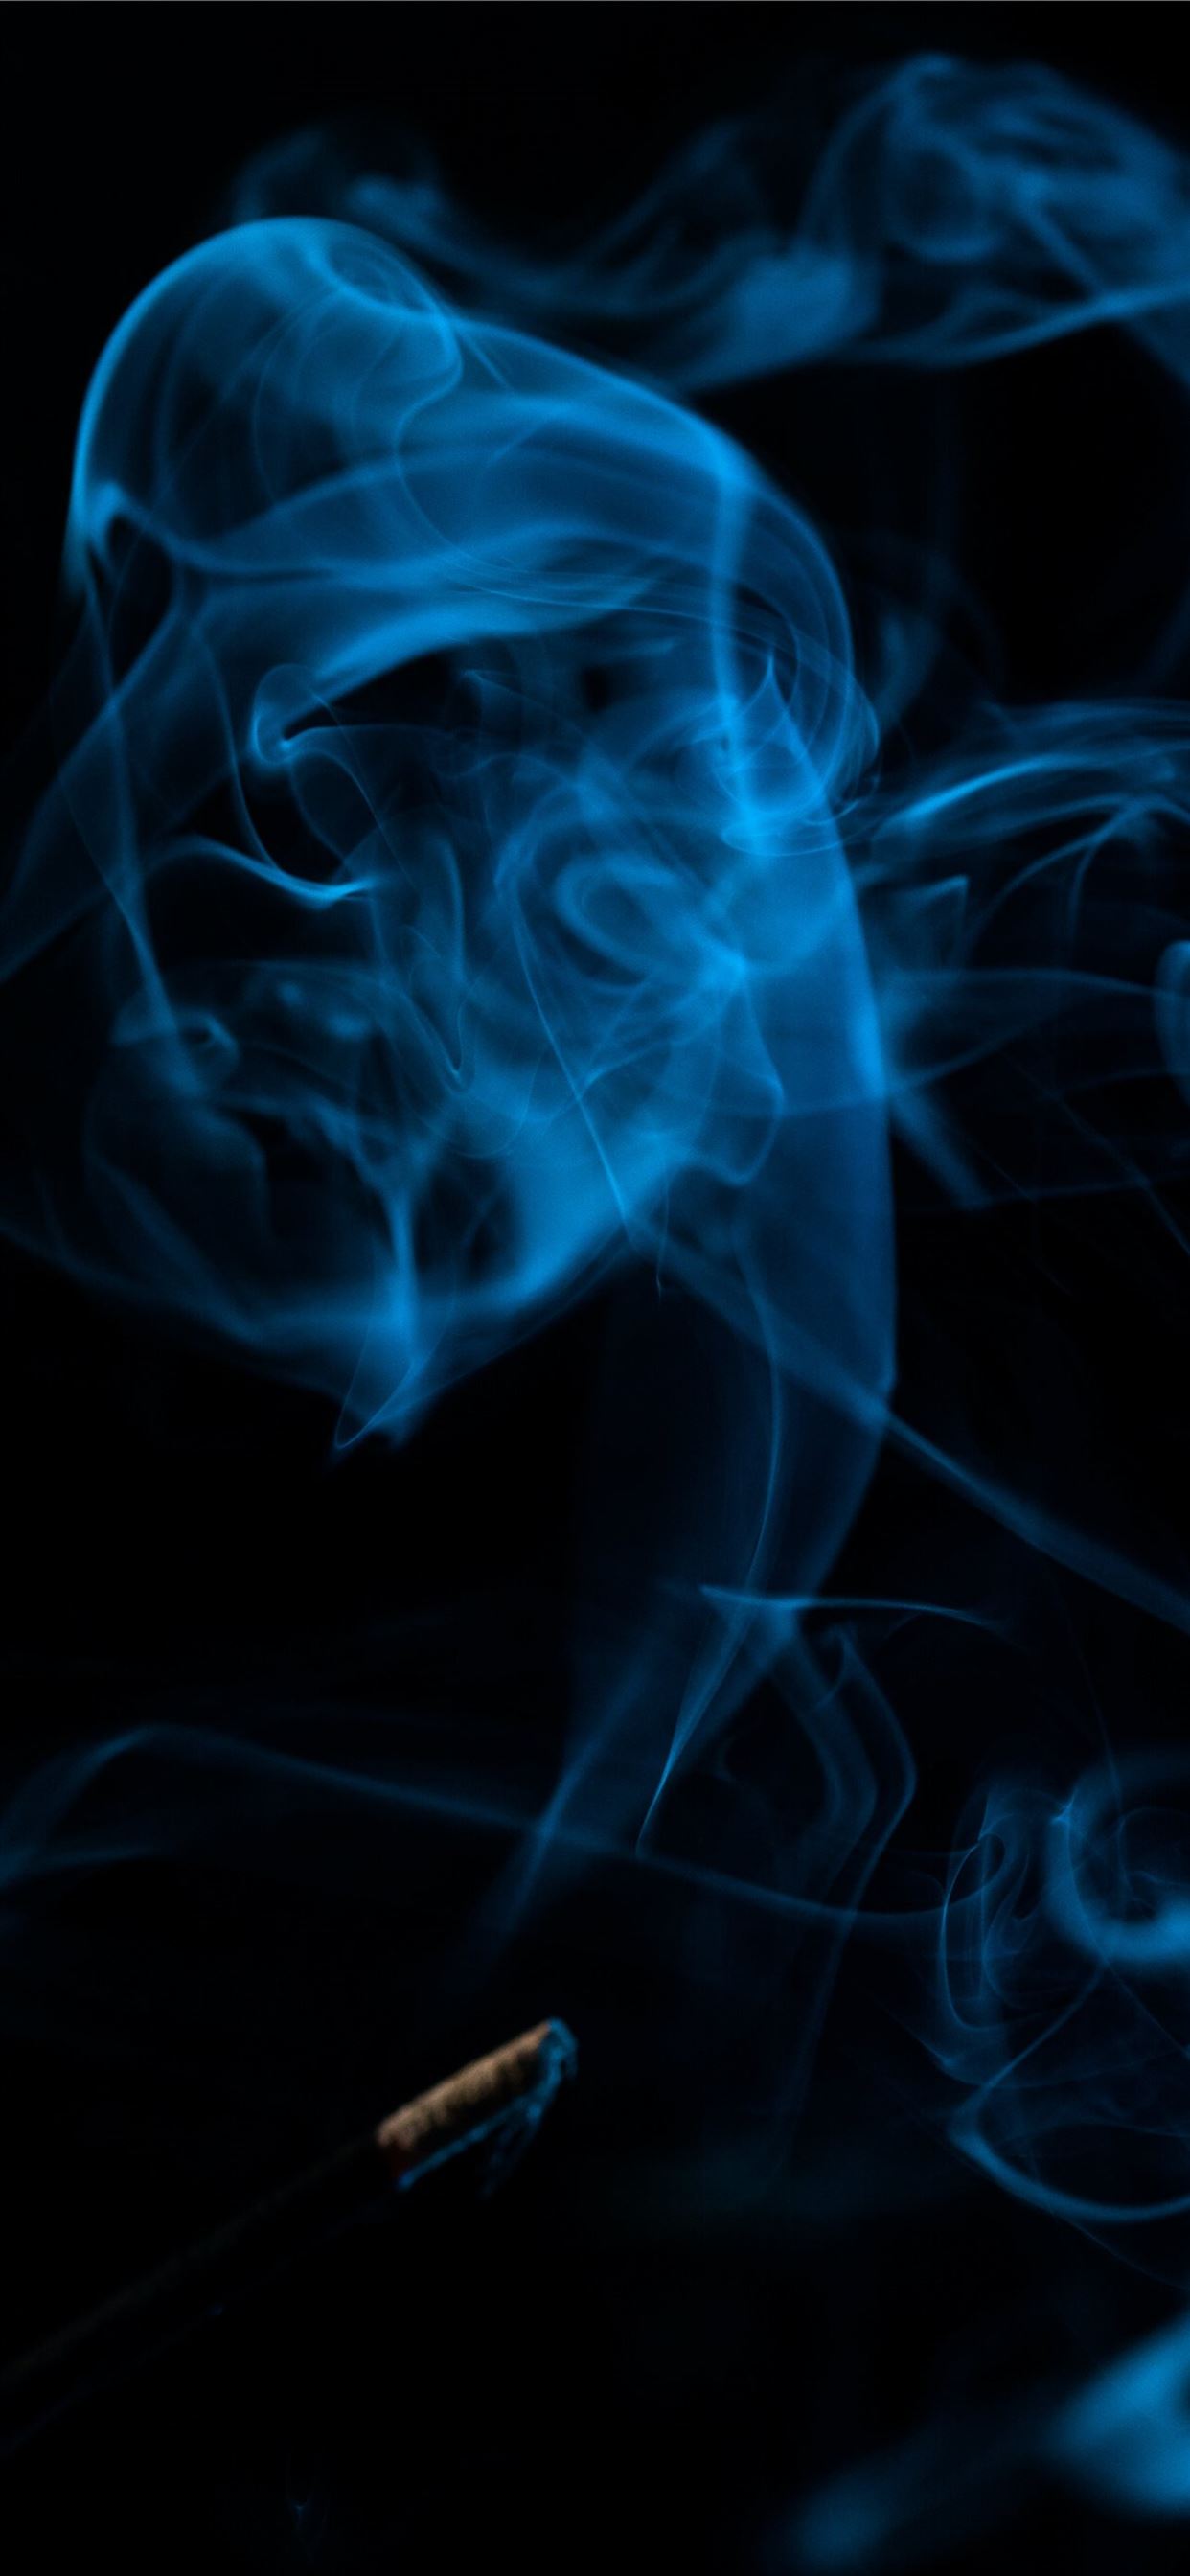 blue smoke wallpaper iPhone Wallpaper Free Download